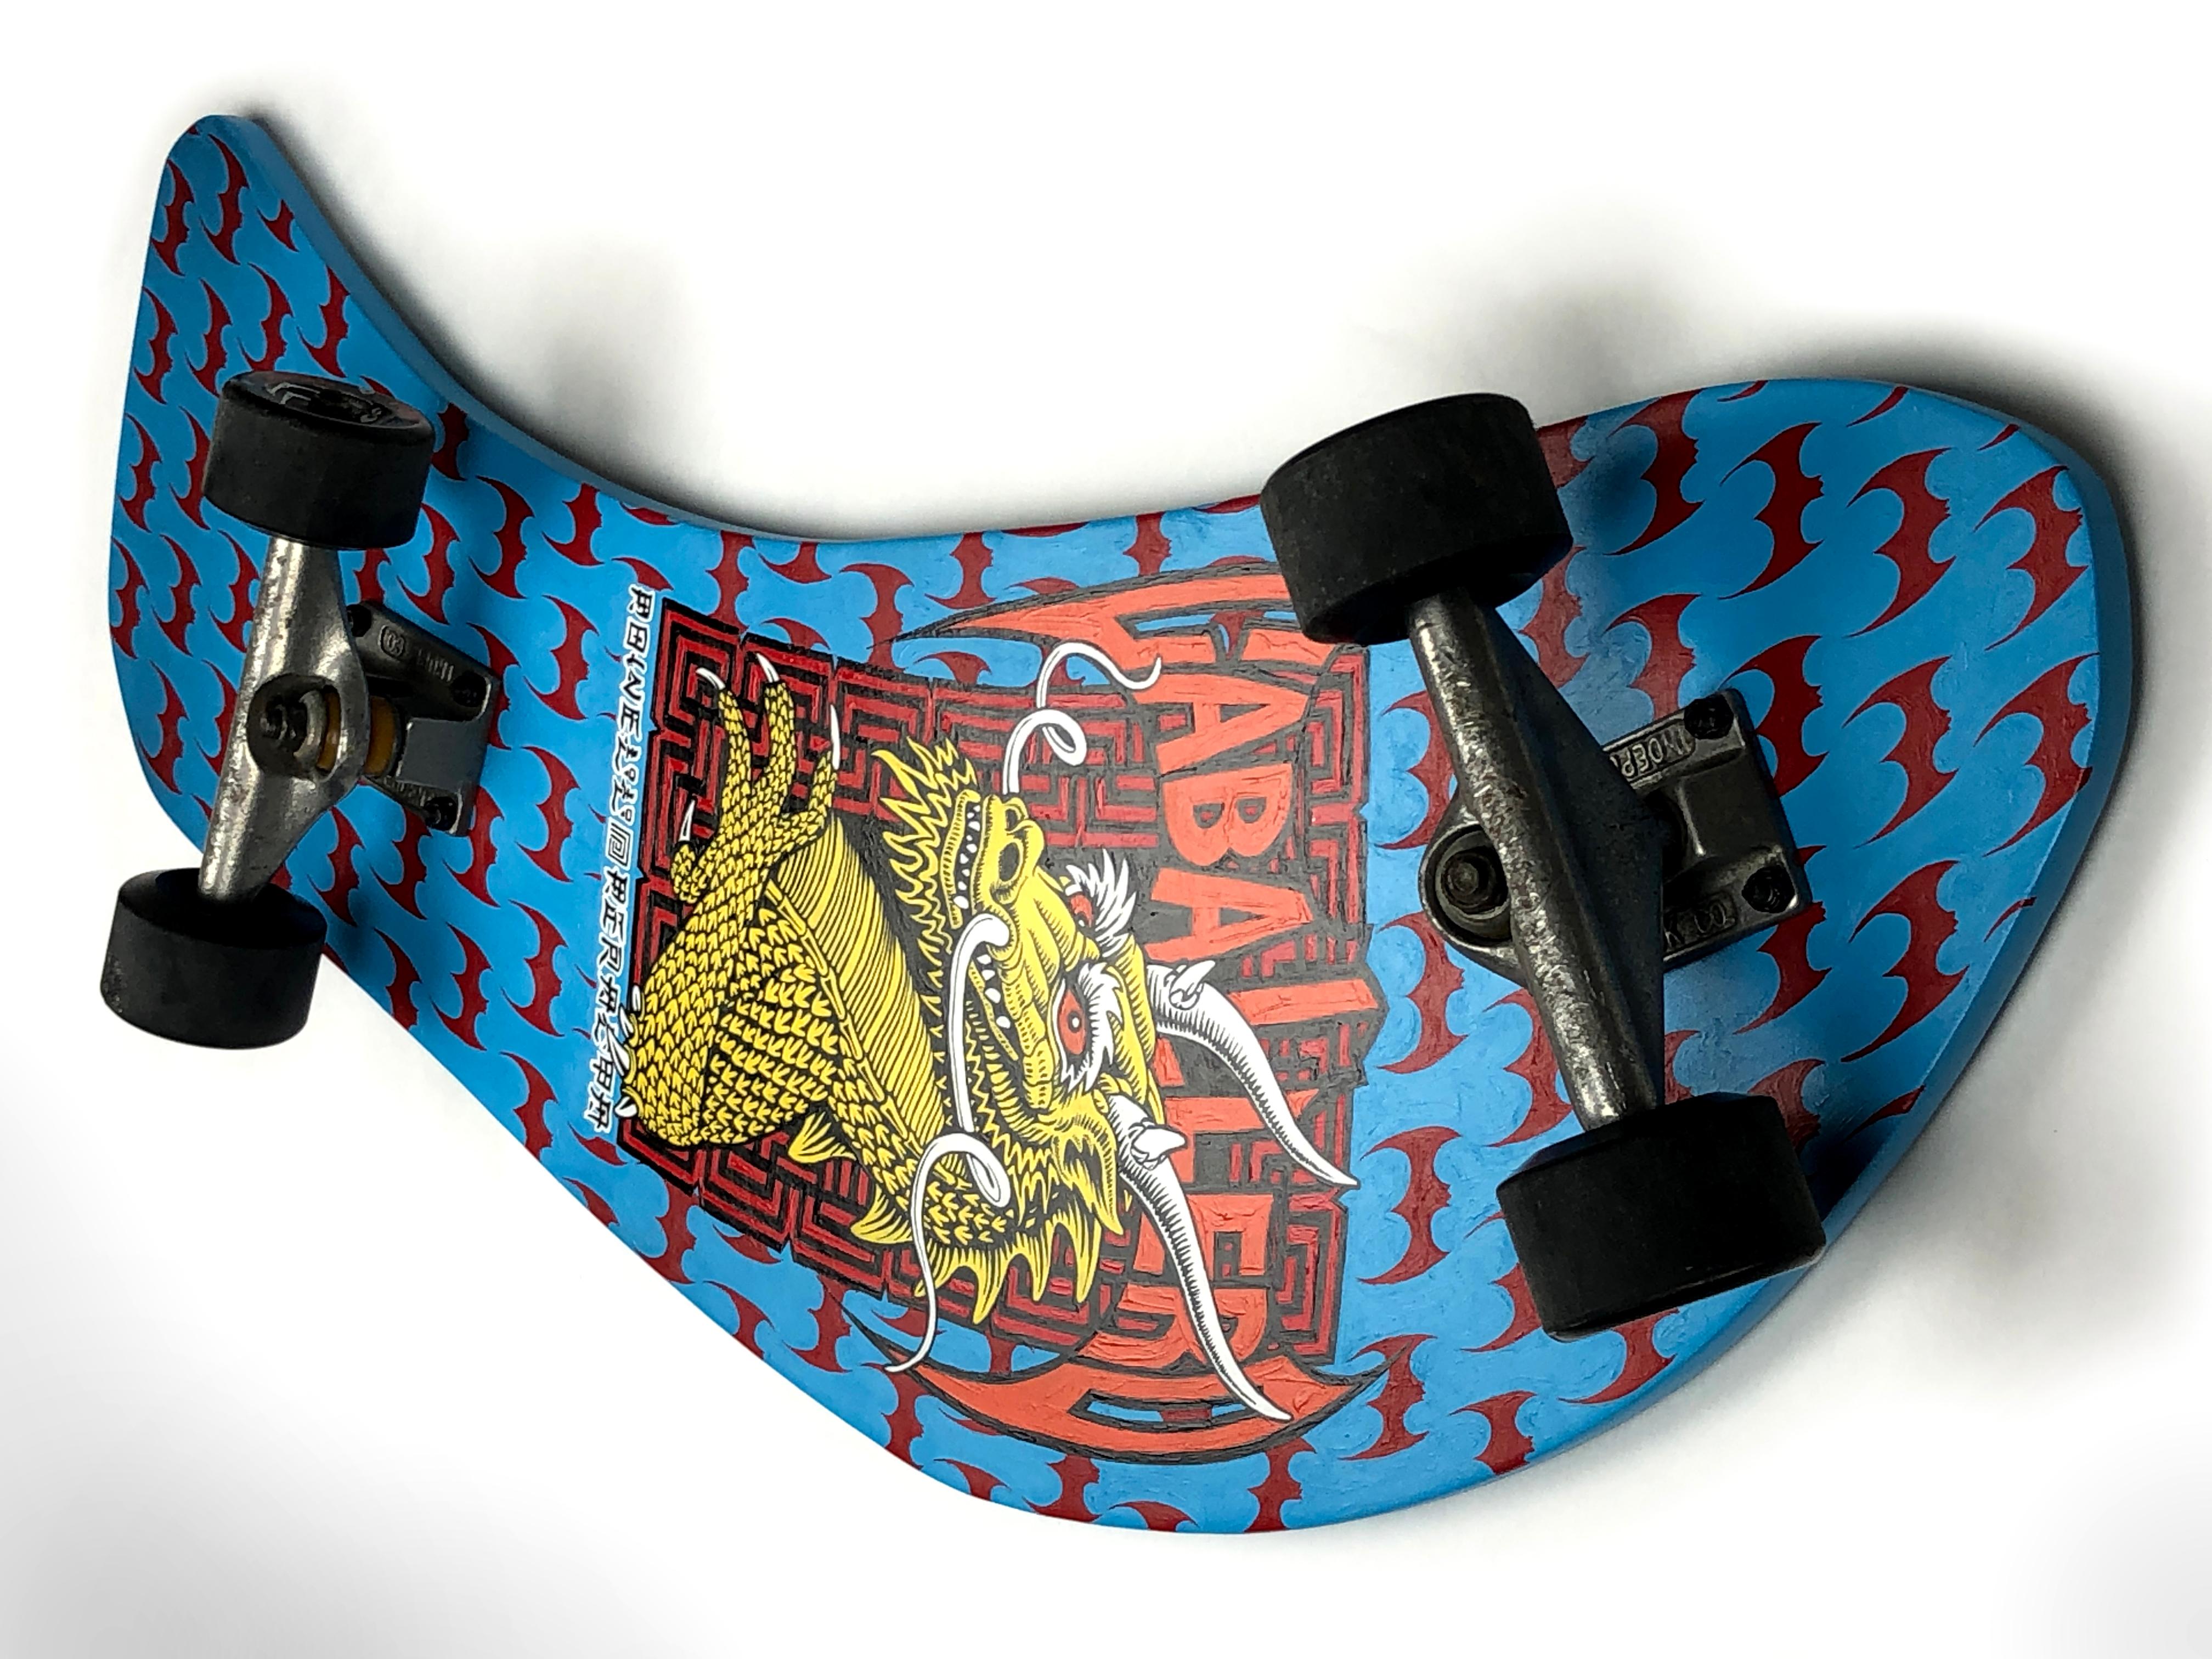 “Cab Dragon Melted Skateboard” - Contemporary Mixed Media Art by Chris Bakay